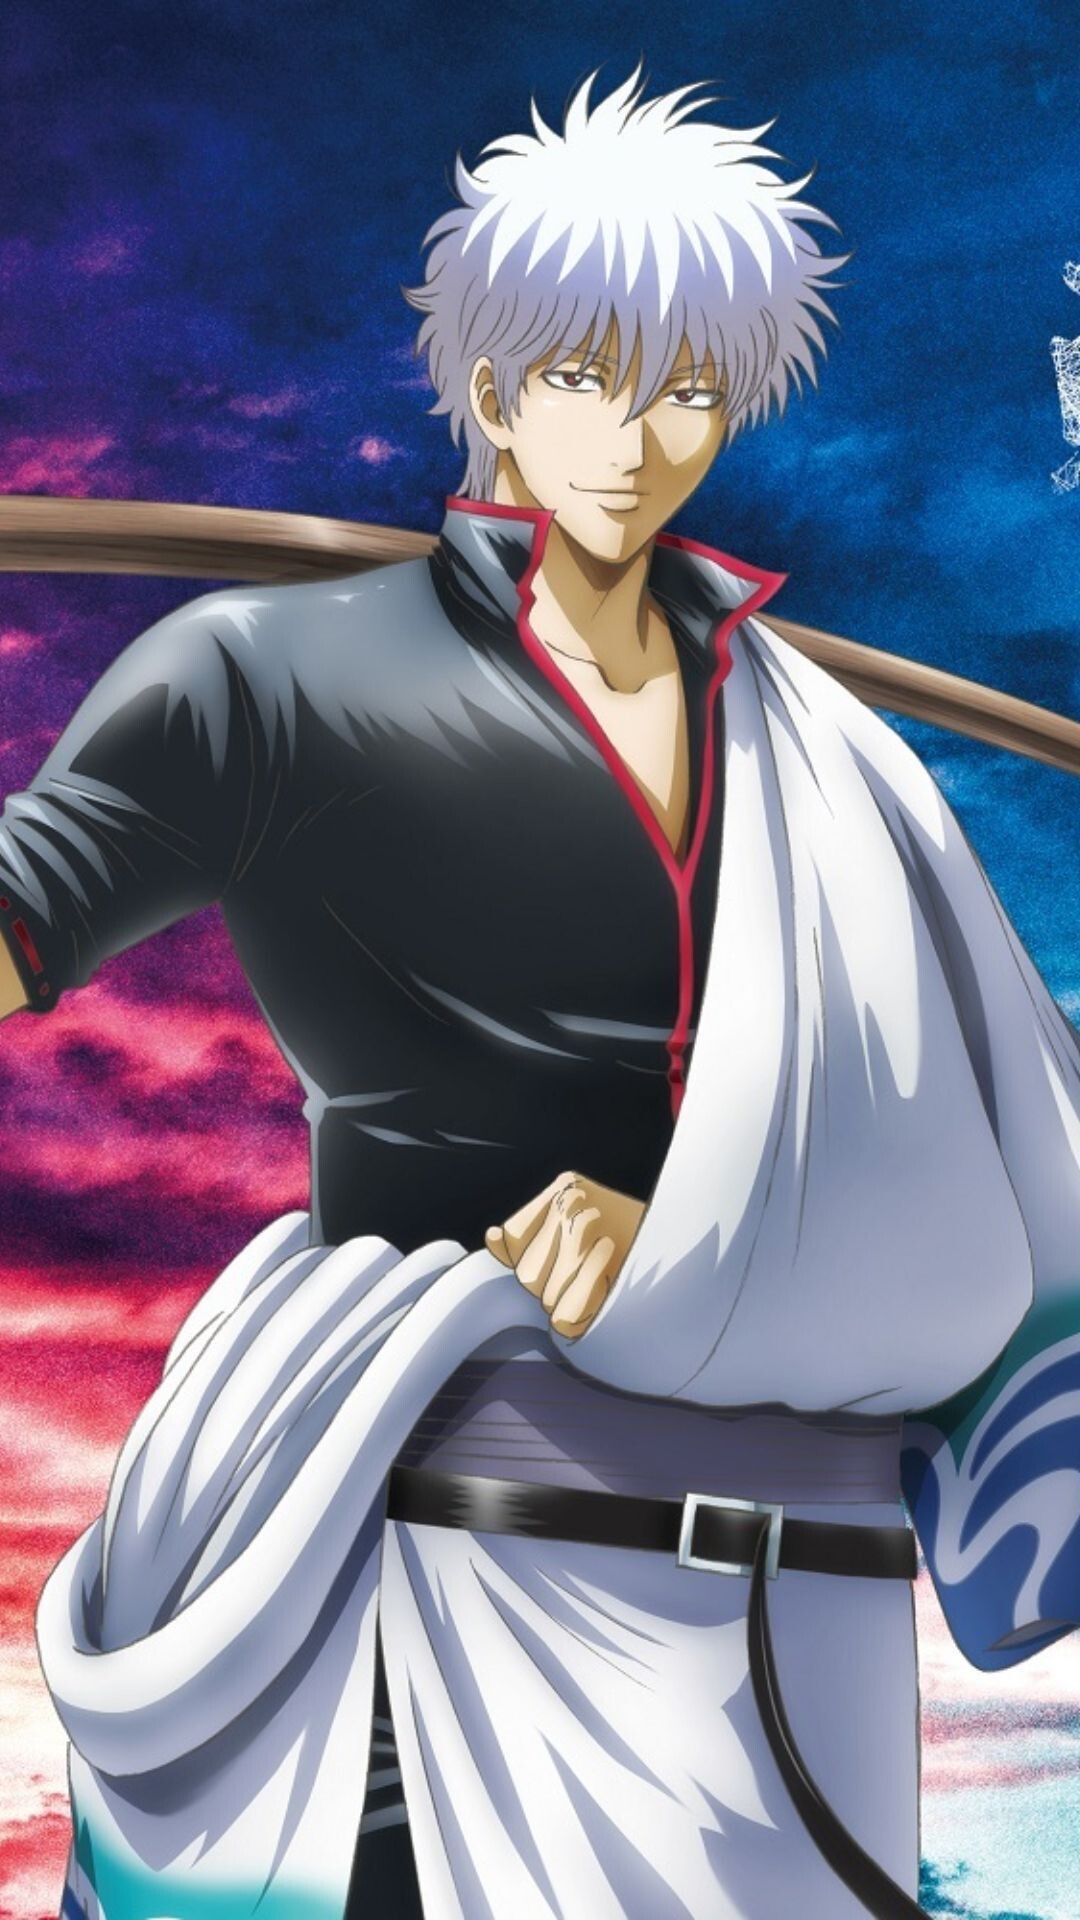 Gintoki Sakata: Anime protagonist known as the “White Devil” due to his silver hair and white clothing, Shiroyasha. 1080x1920 Full HD Background.